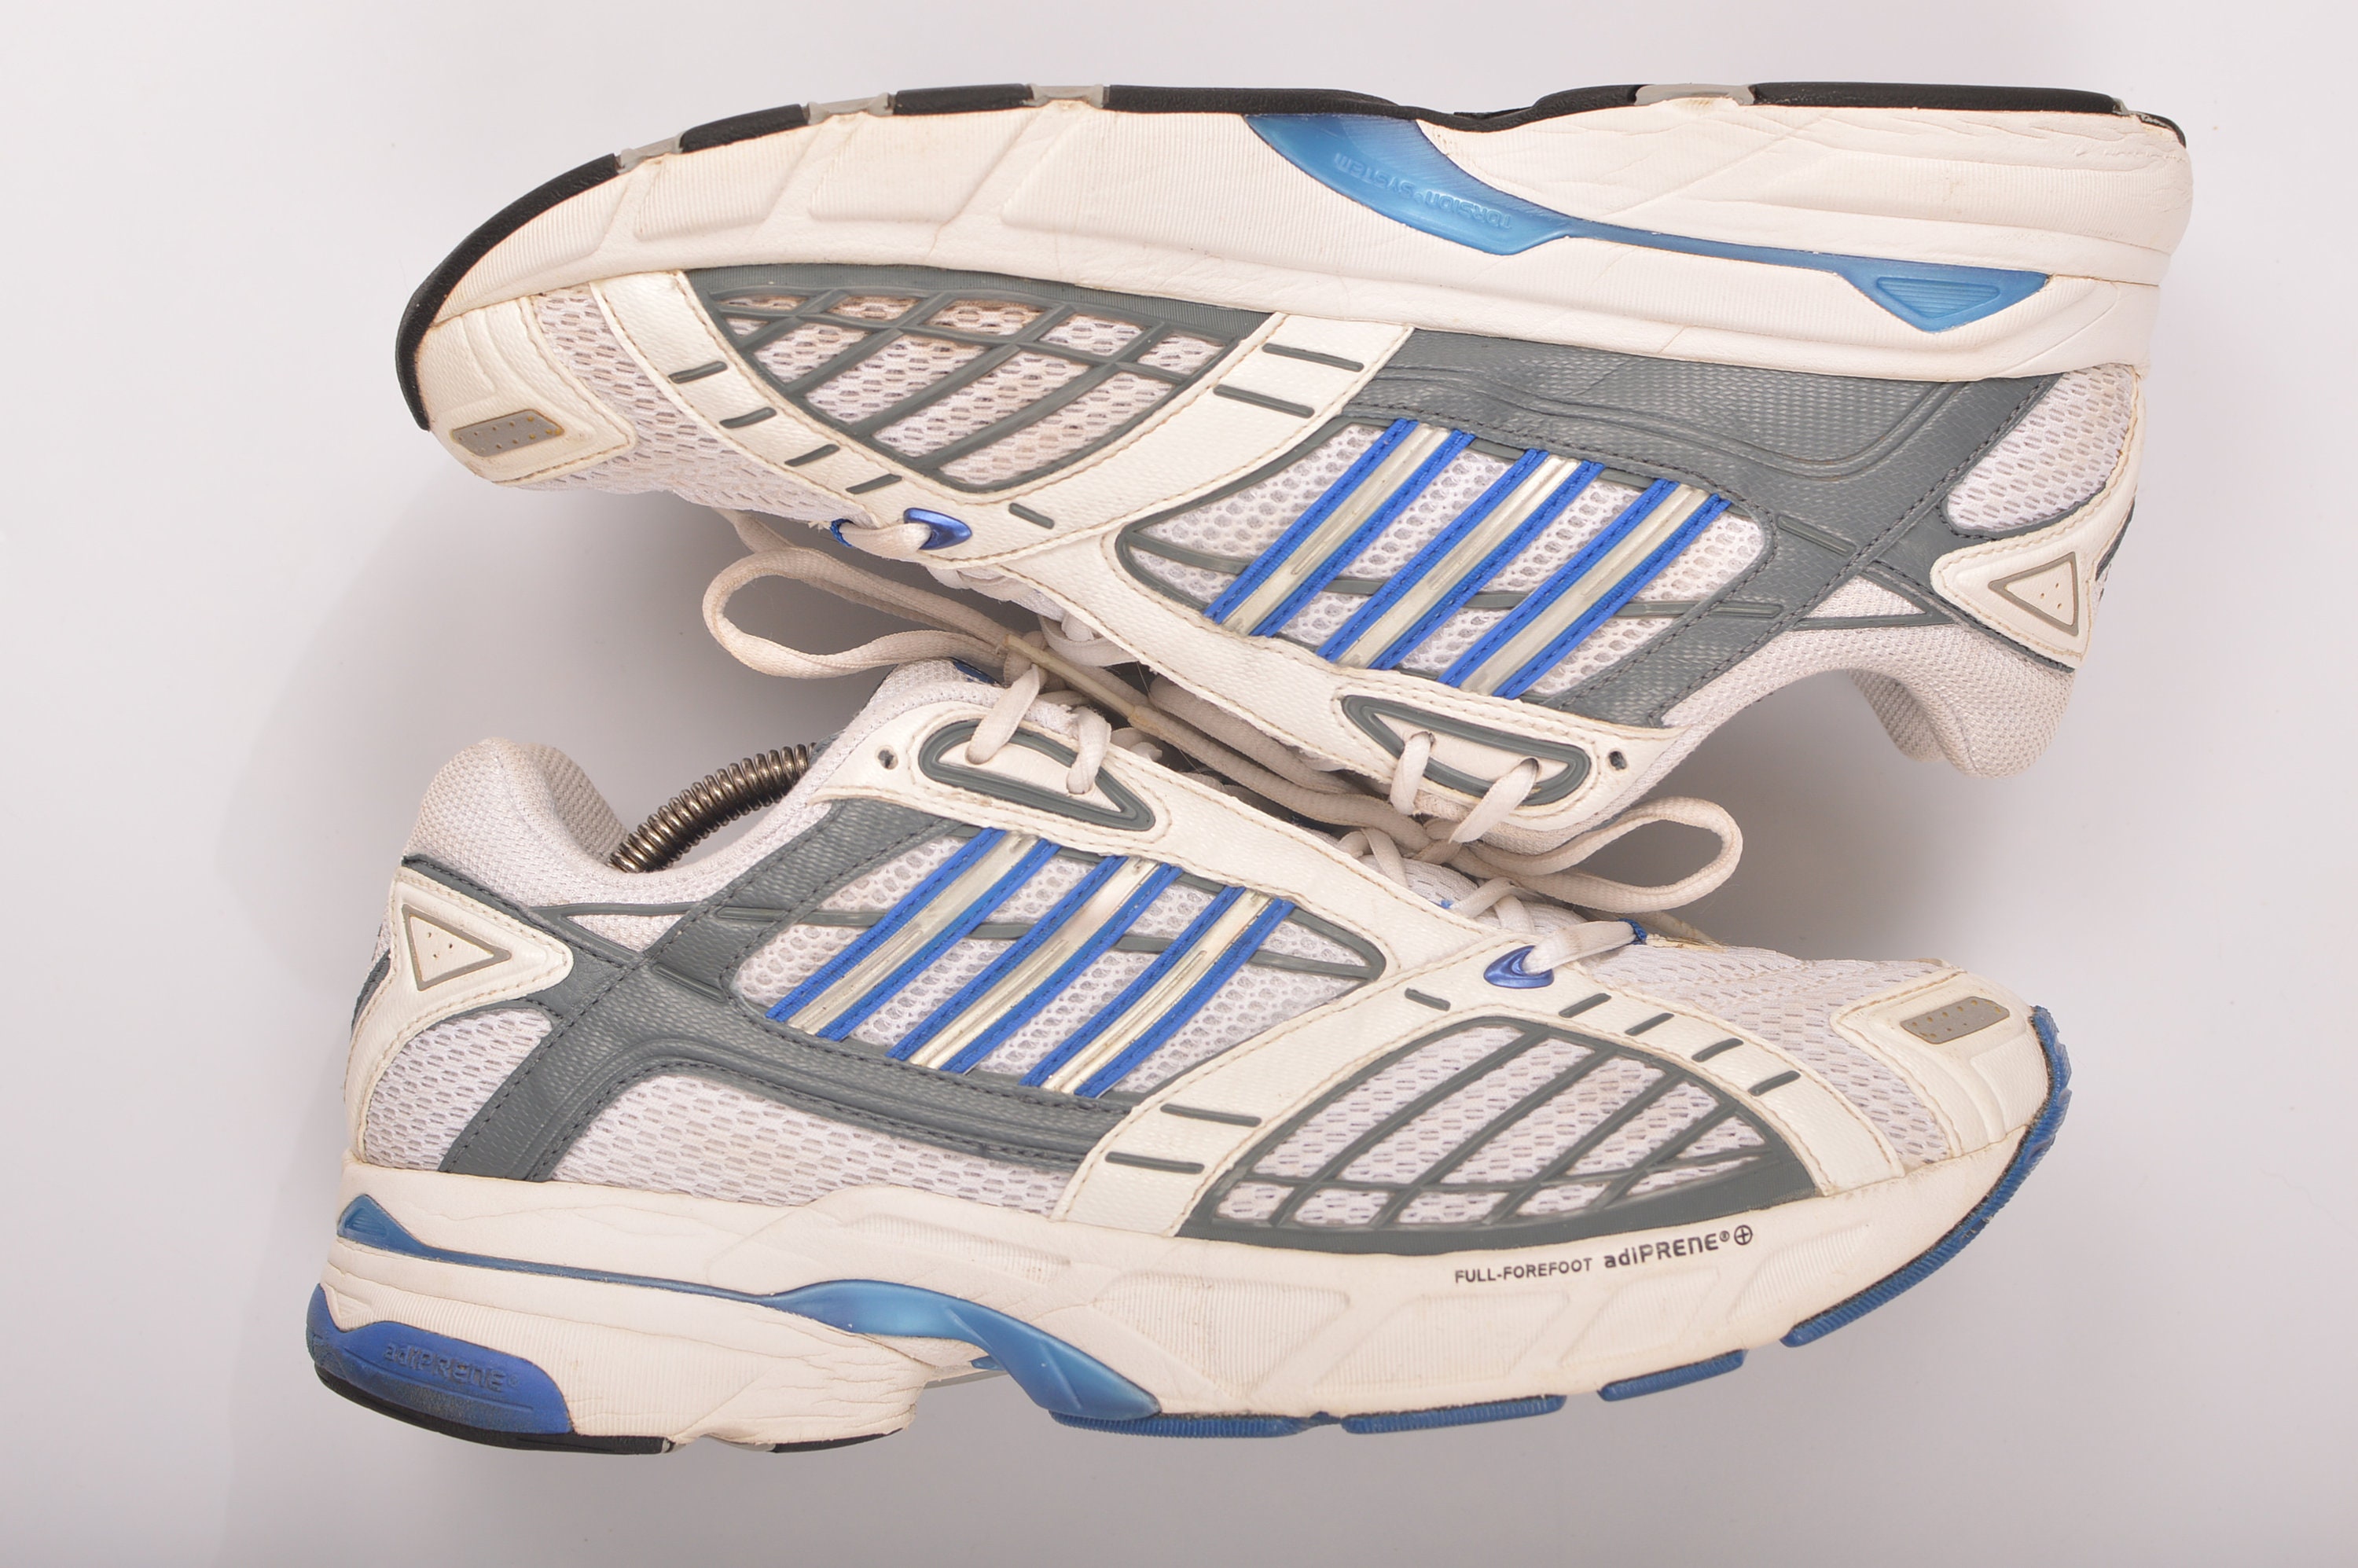 Adidas Full Forefoot Adiprene 2003 Running Sneakers Trainers - Etsy